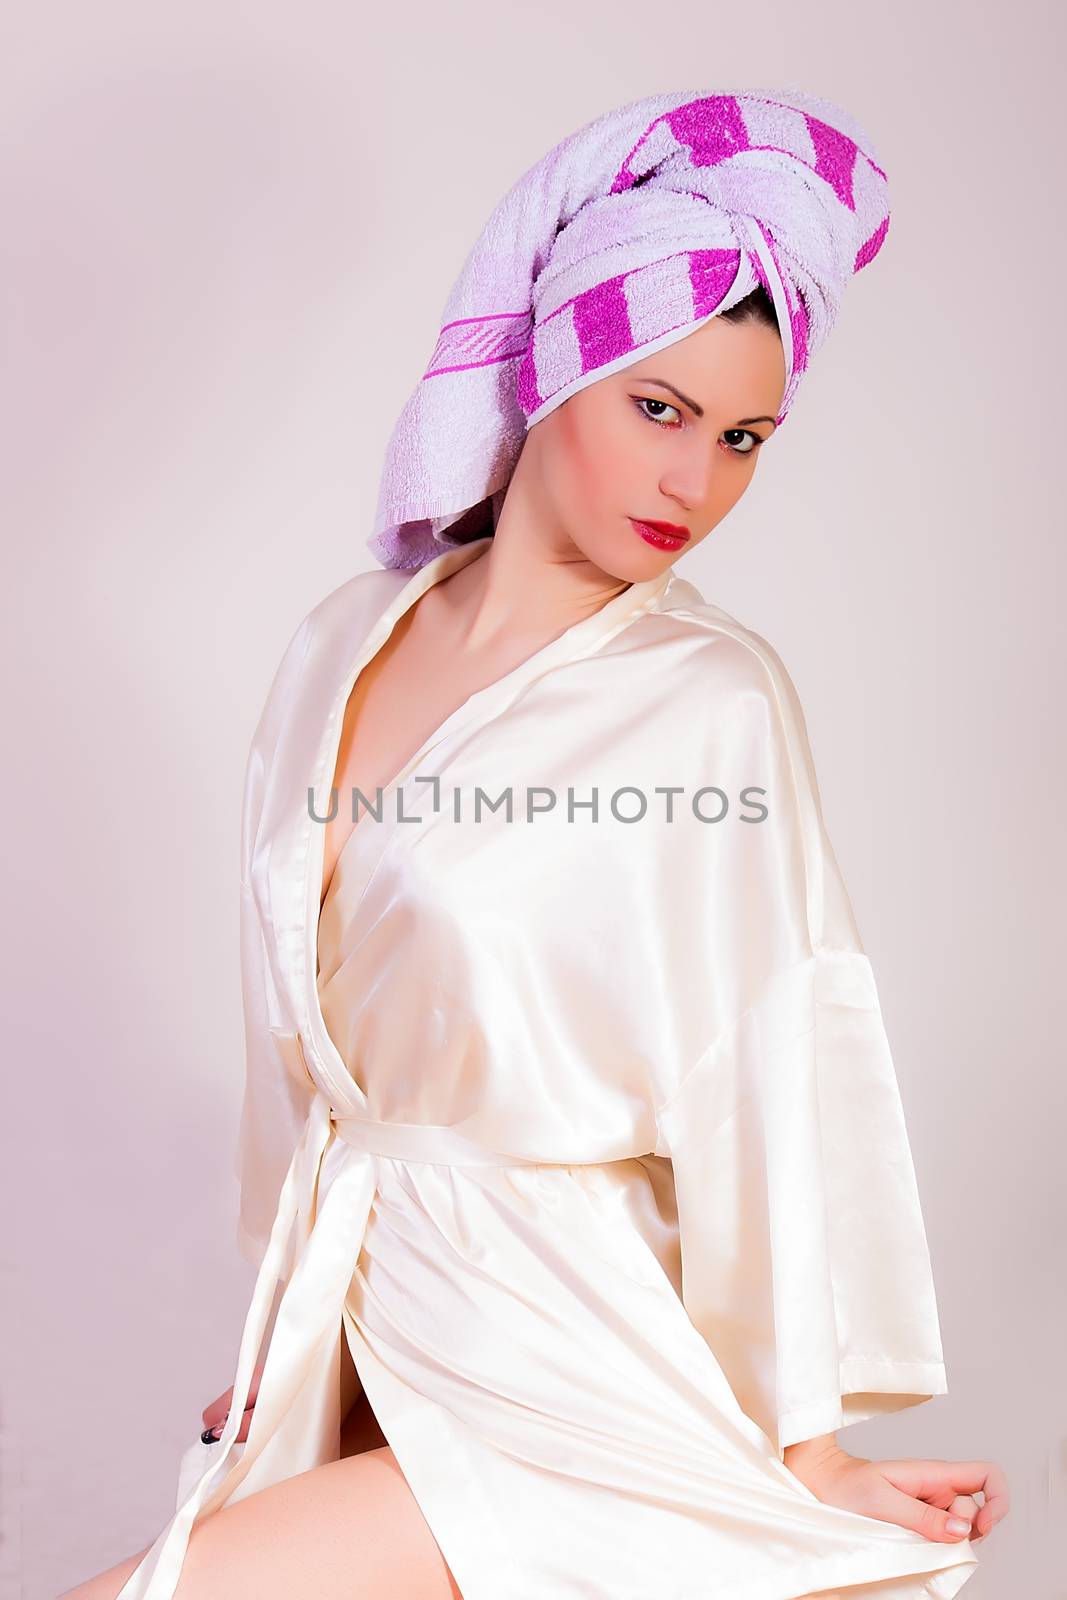 Beautiful girl with towel on her head by dukibu